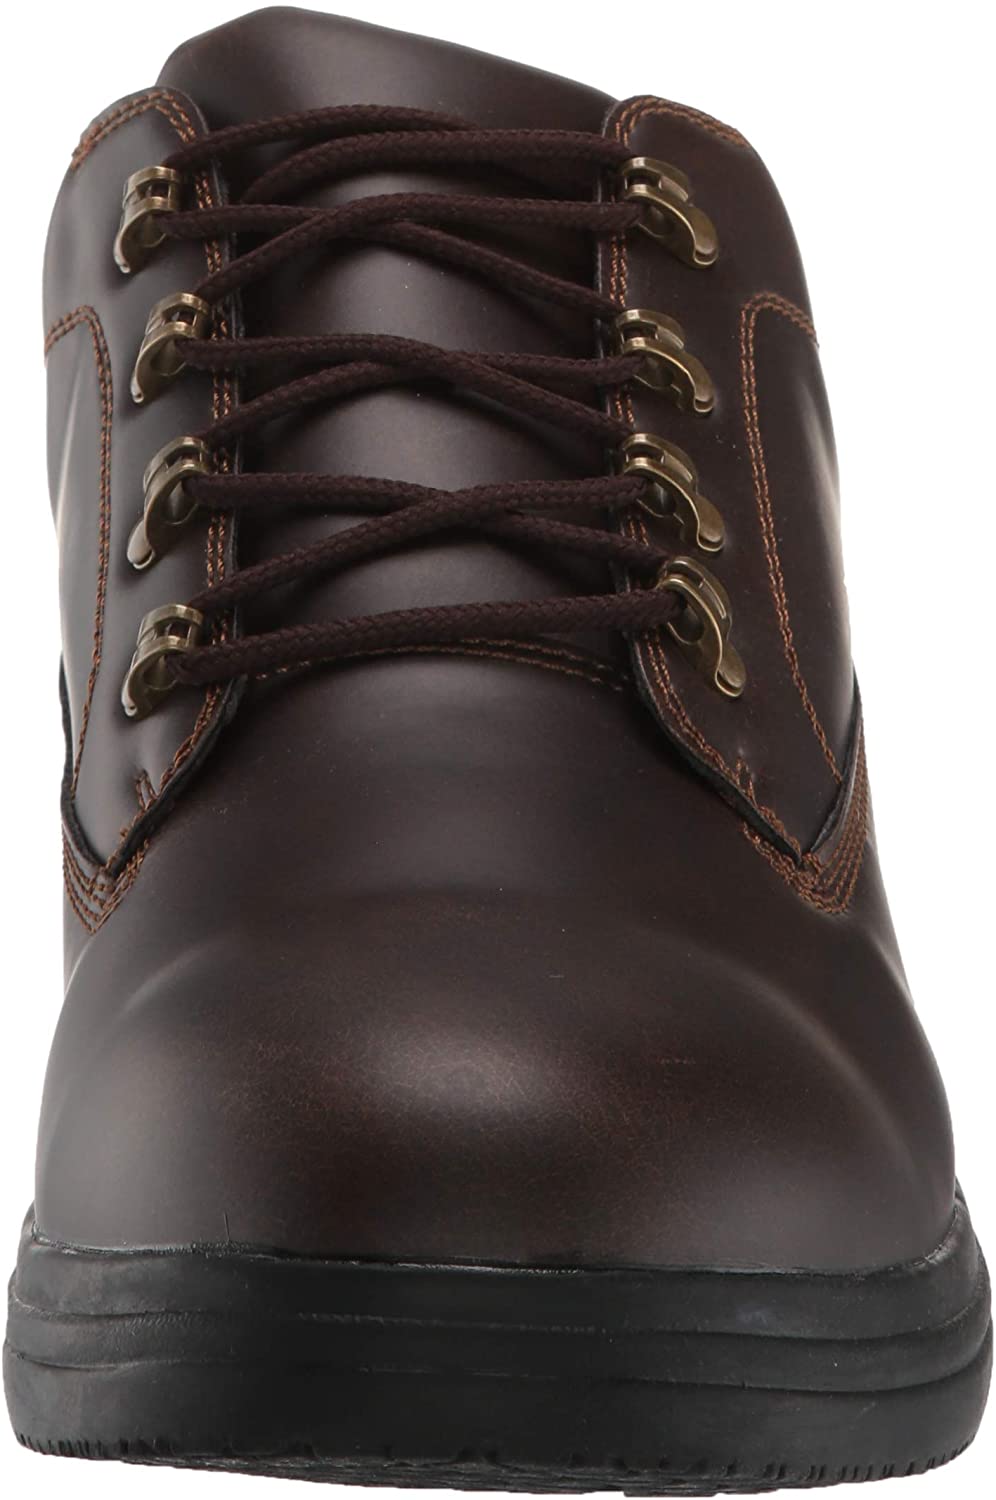 Deer Stags Men's Plant Ankle Boot, Dark Brown, Size 8.5 Ykf5 | eBay